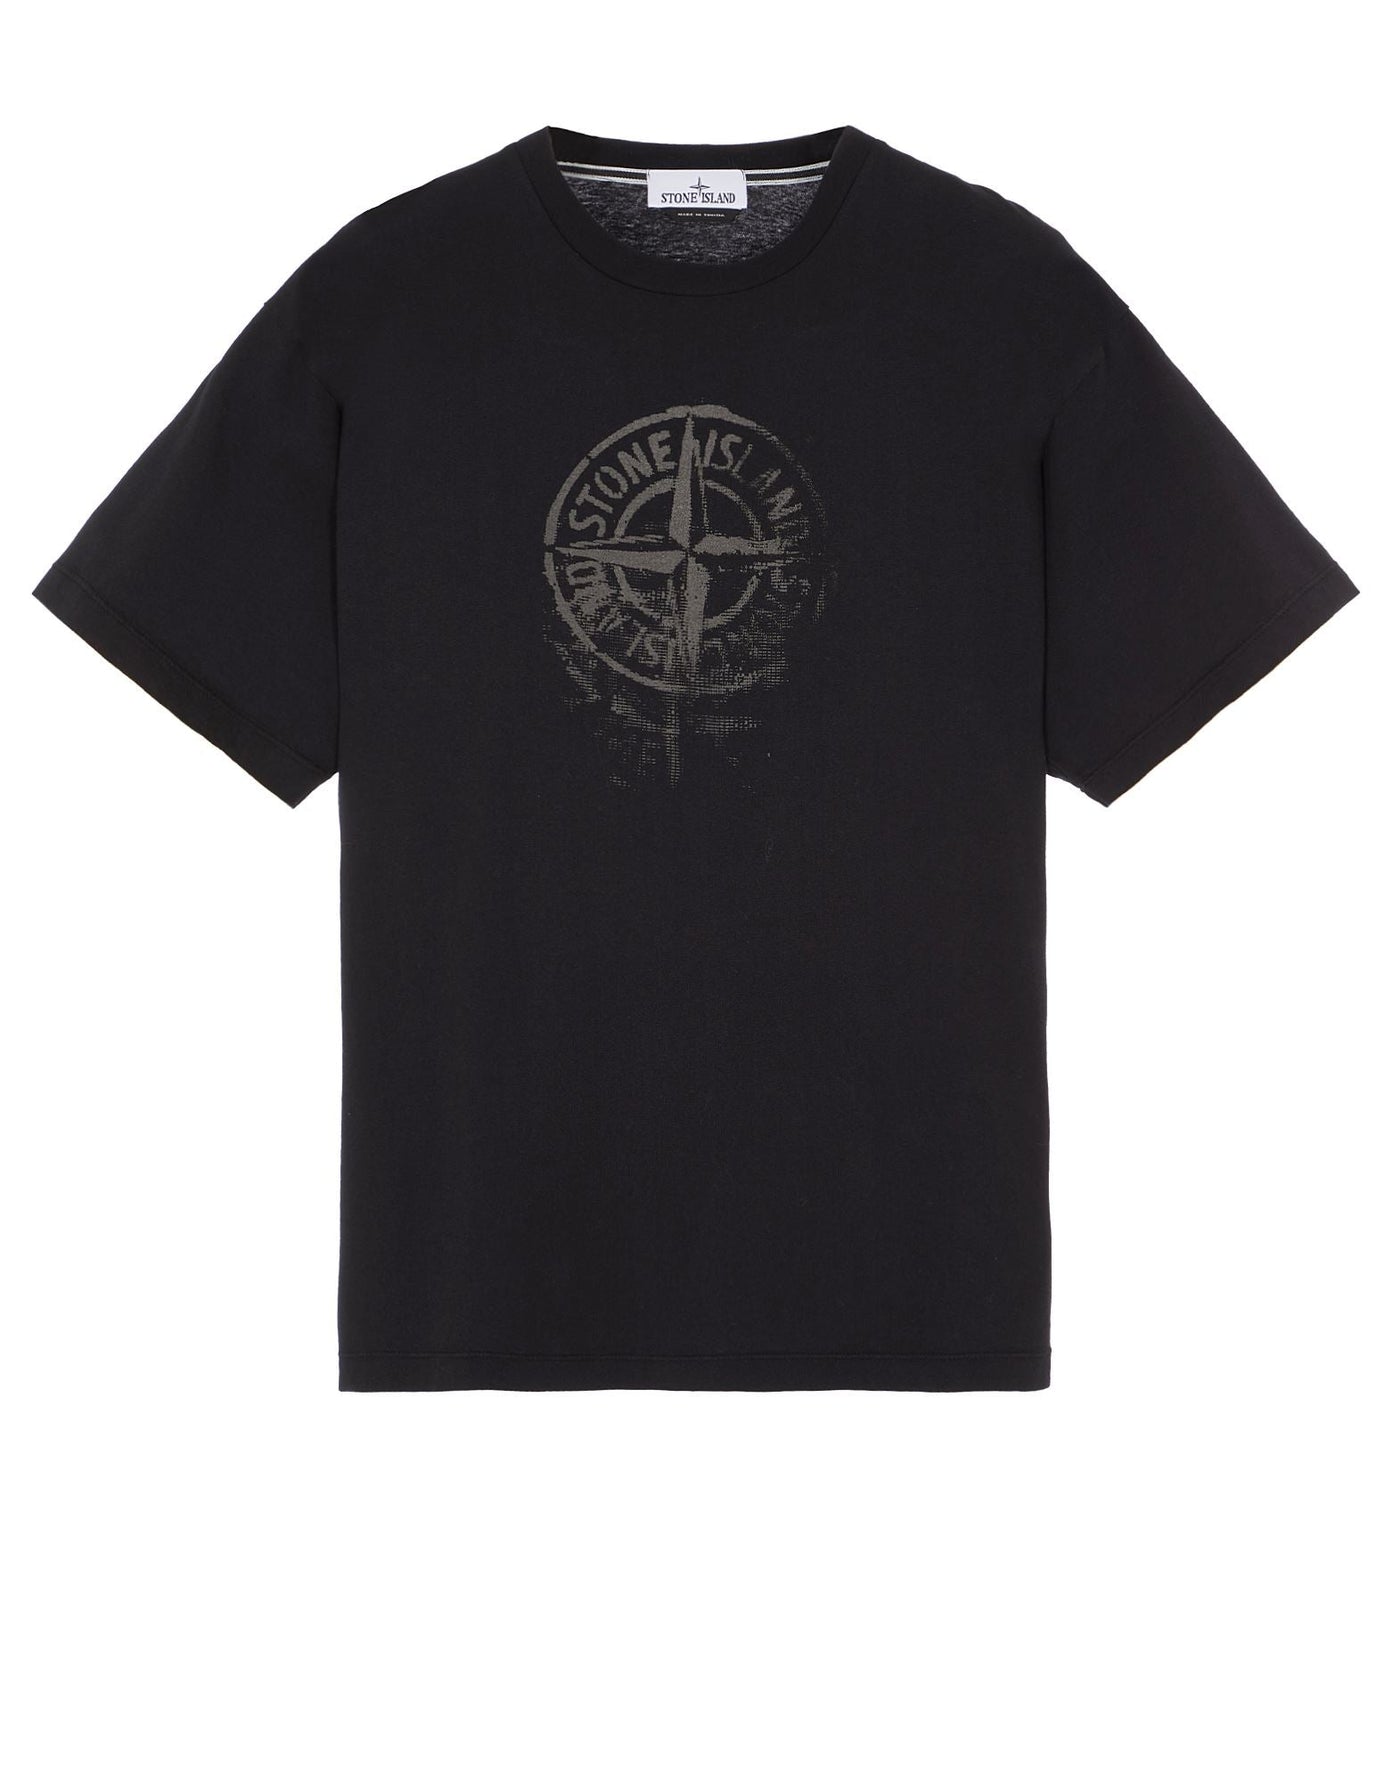 Stone Island - T Shirt black 2RC87 'REFLECTIVE ONE' PRINT - Lothaire